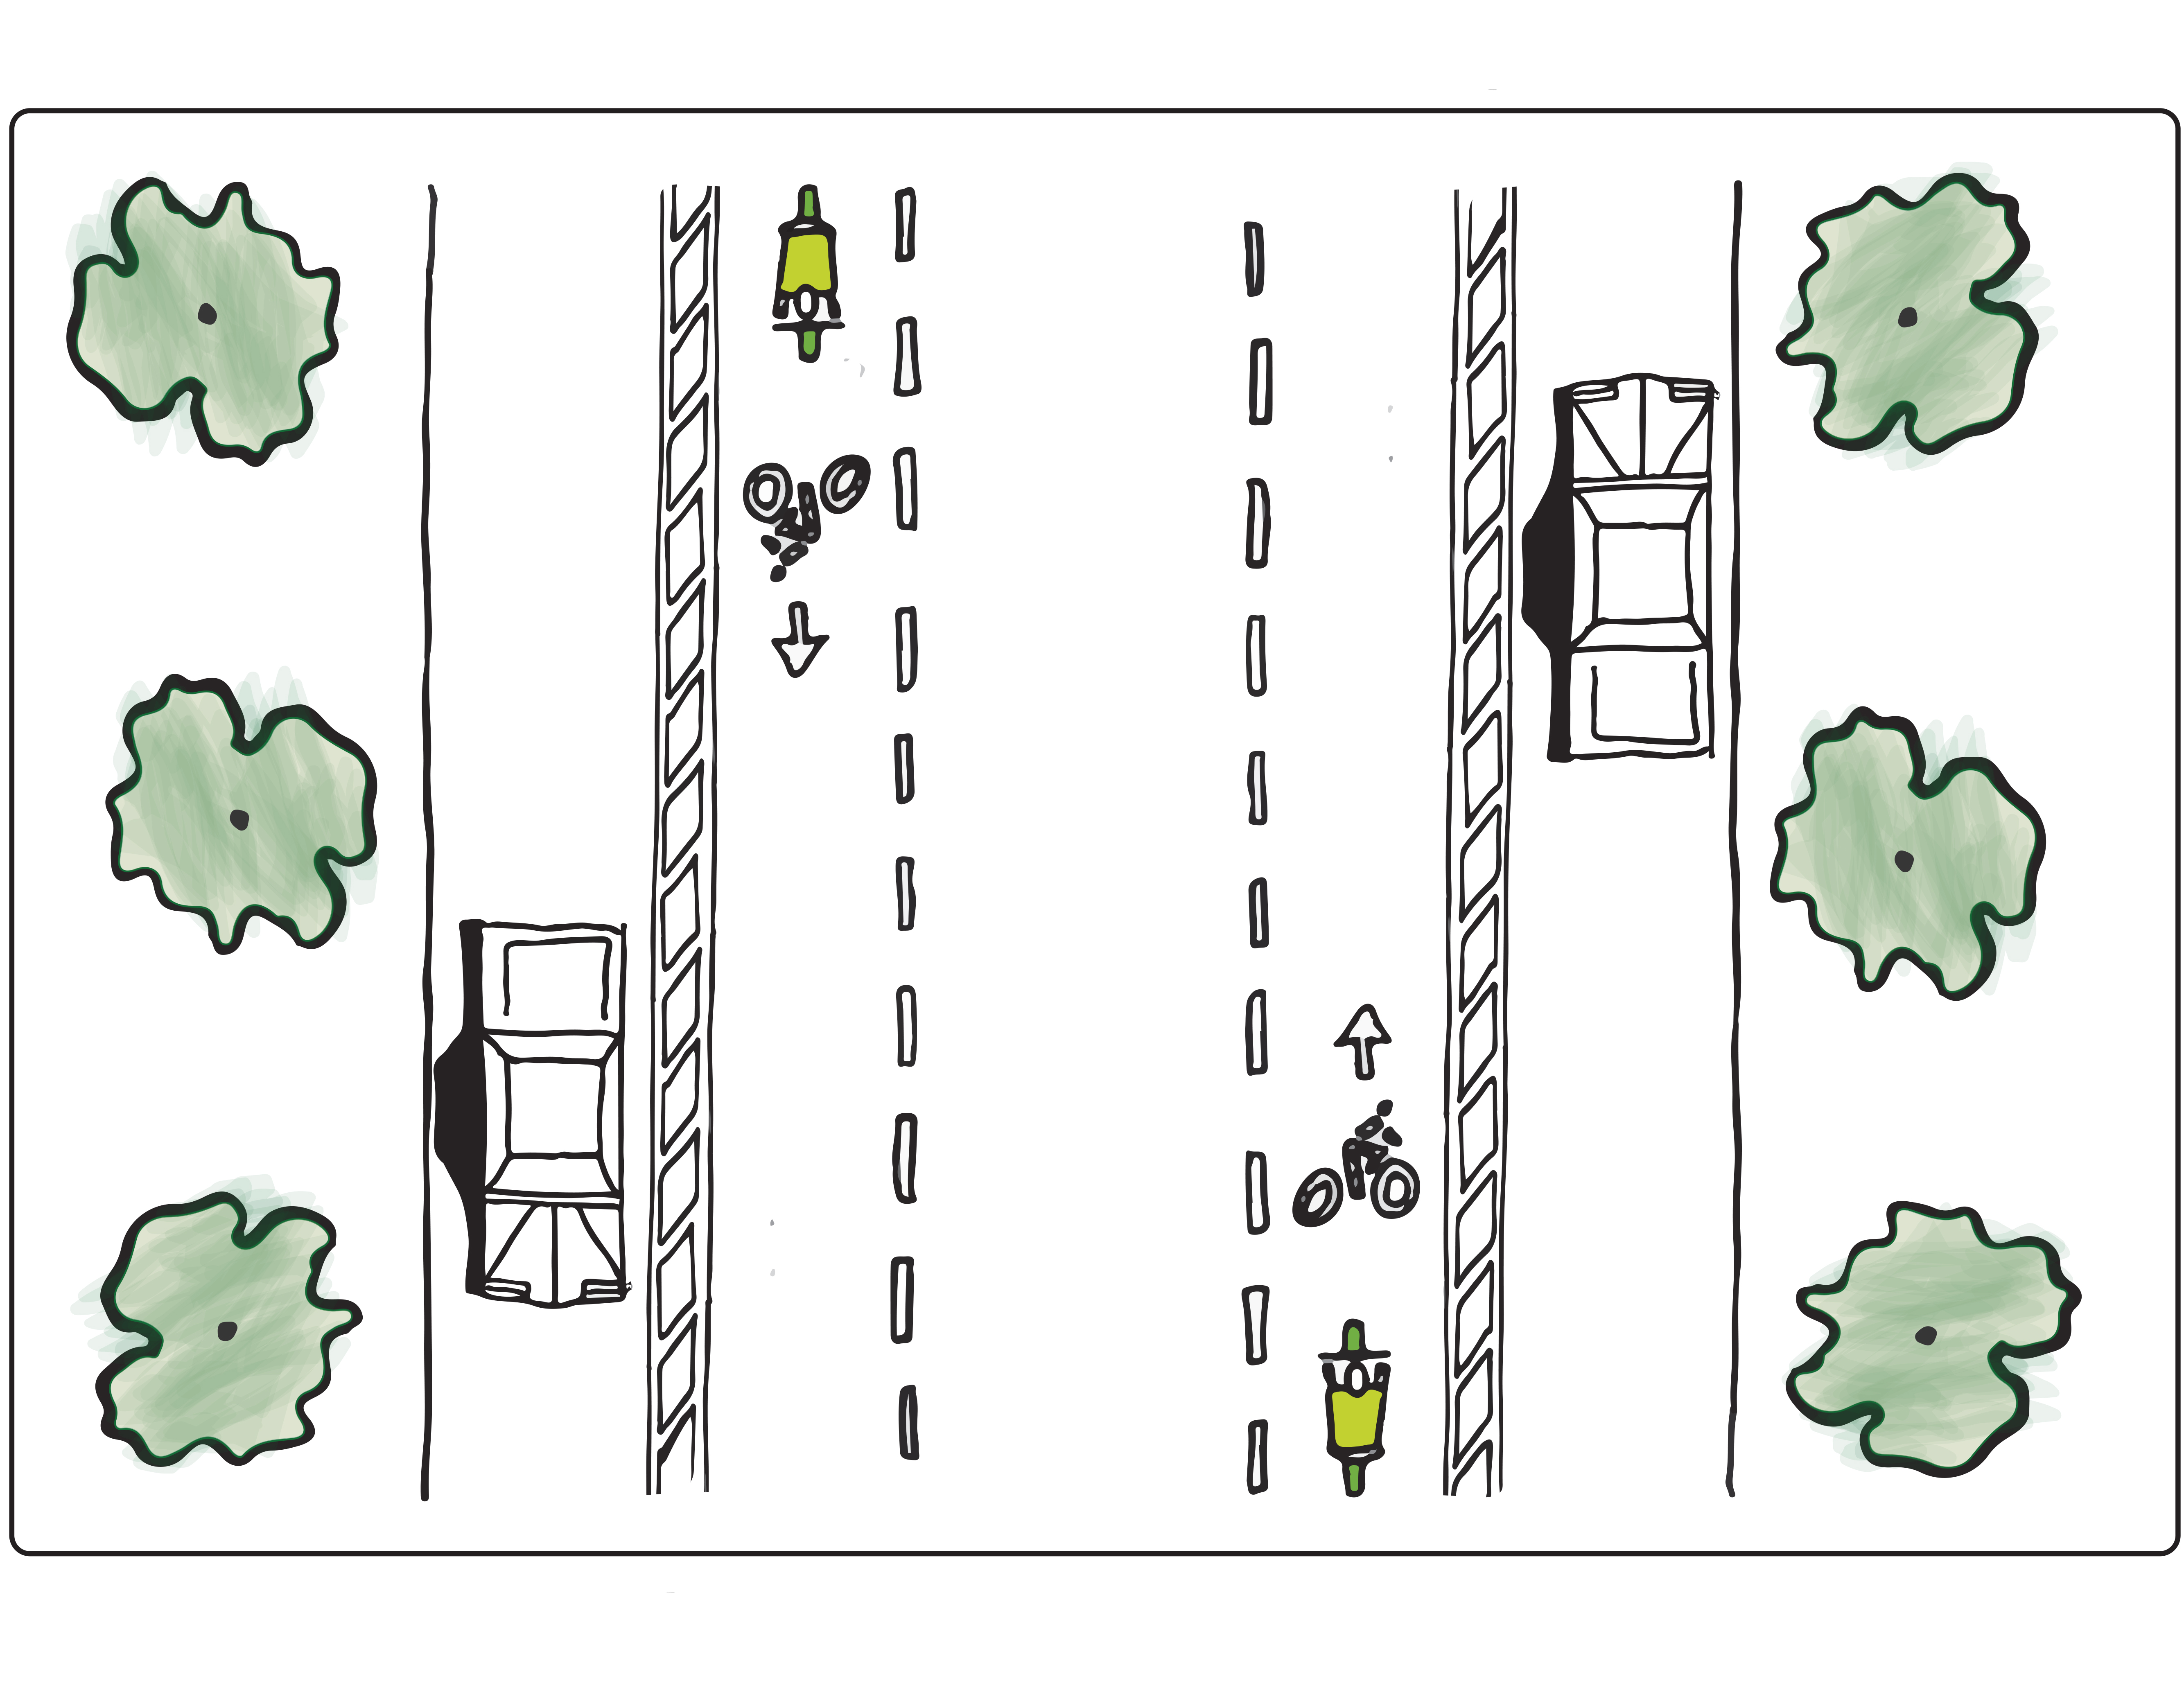 Bike Access on the Spruce Street Corridor